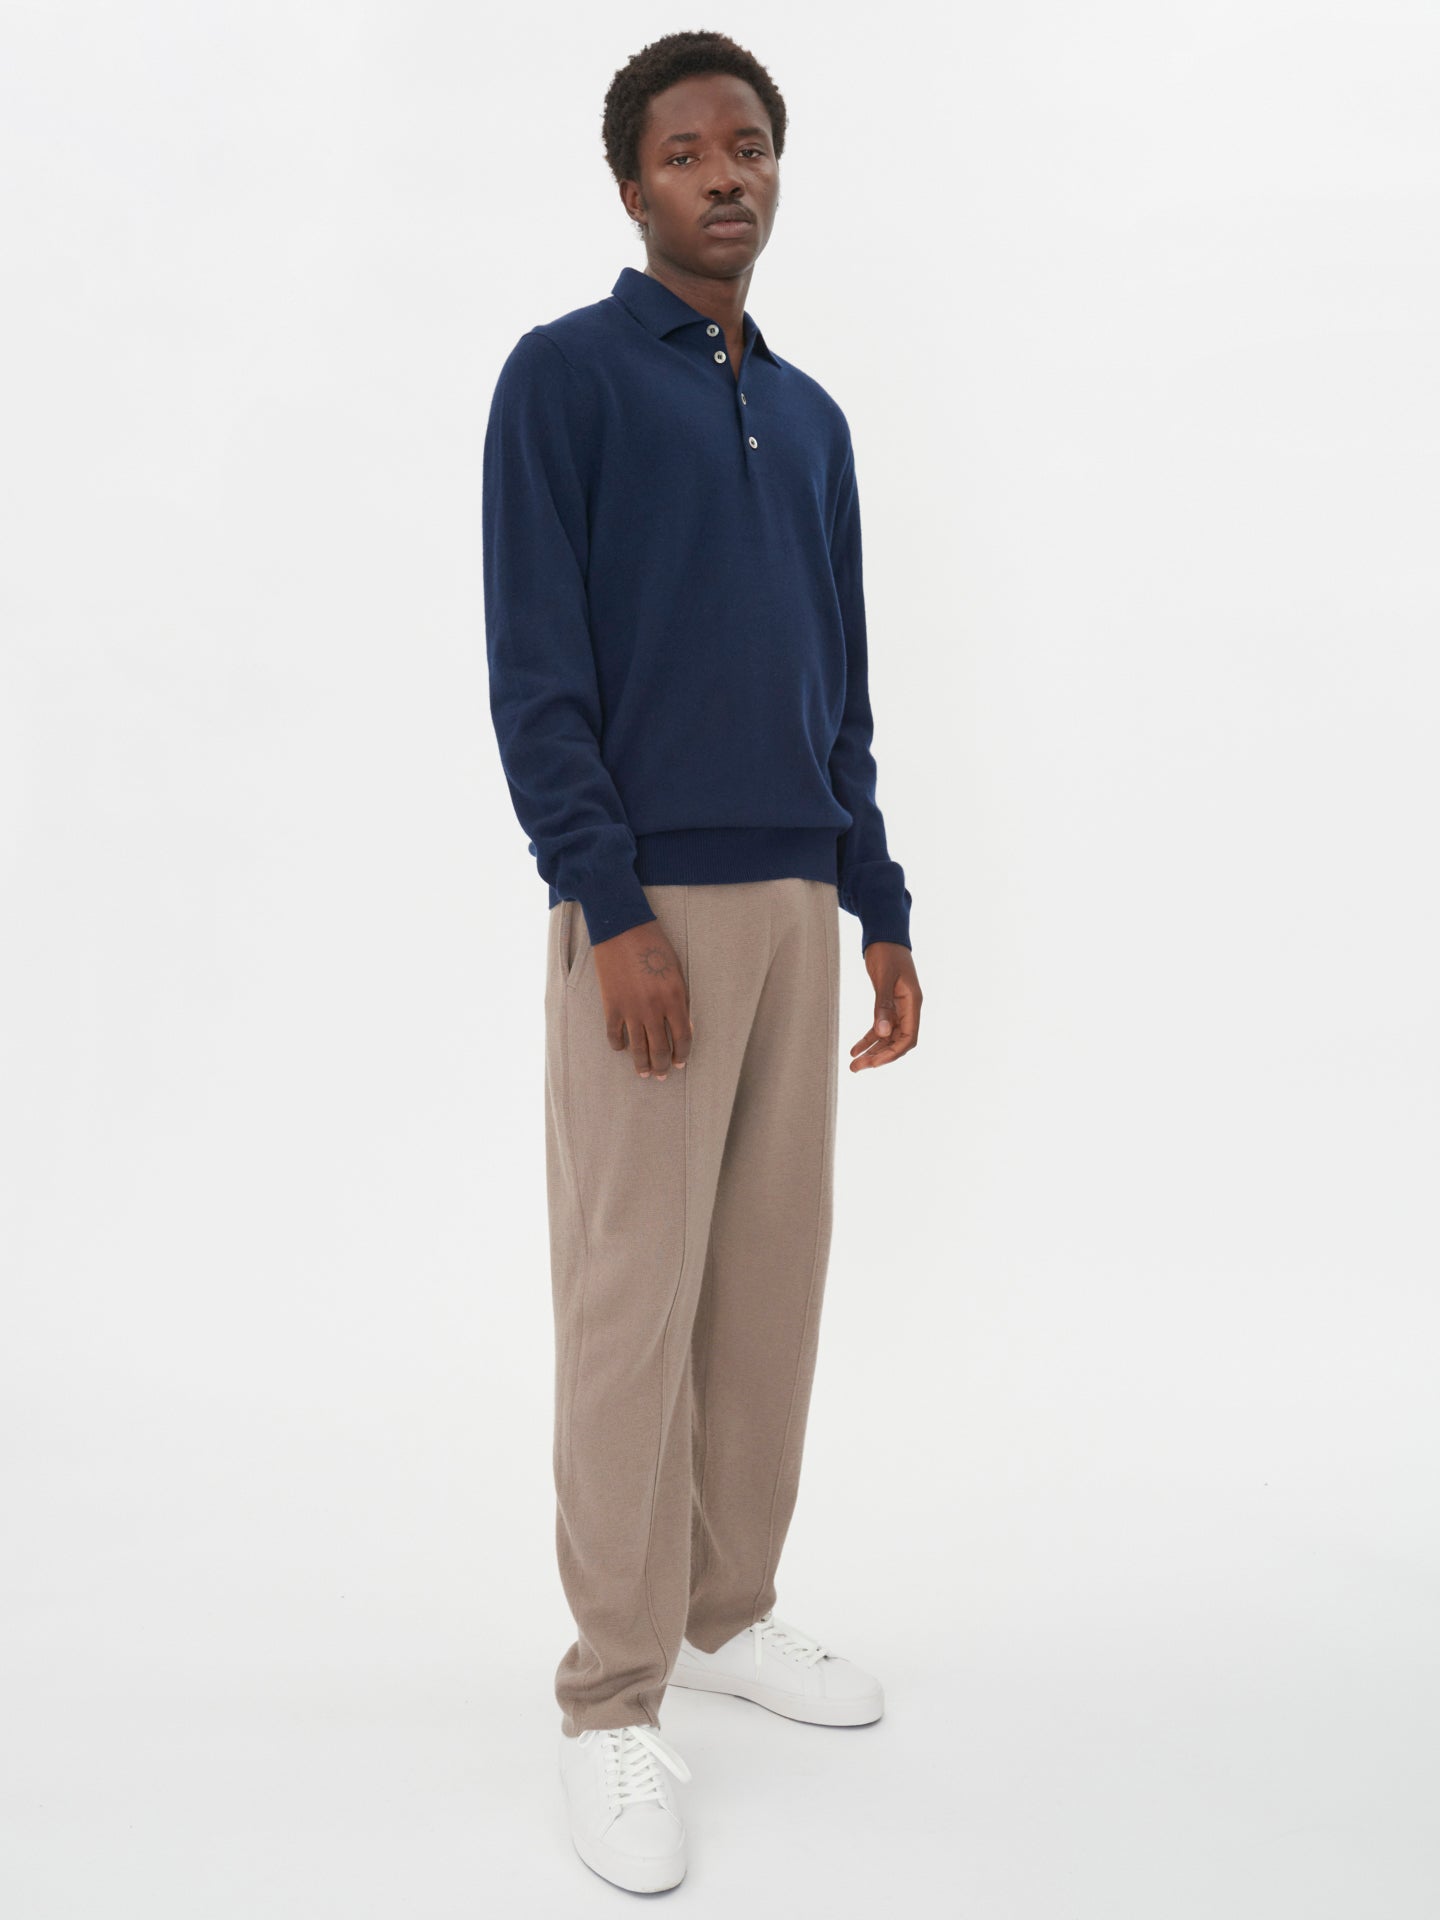 Men's Cashmere Polo Sweater Navy - Gobi Cashmere